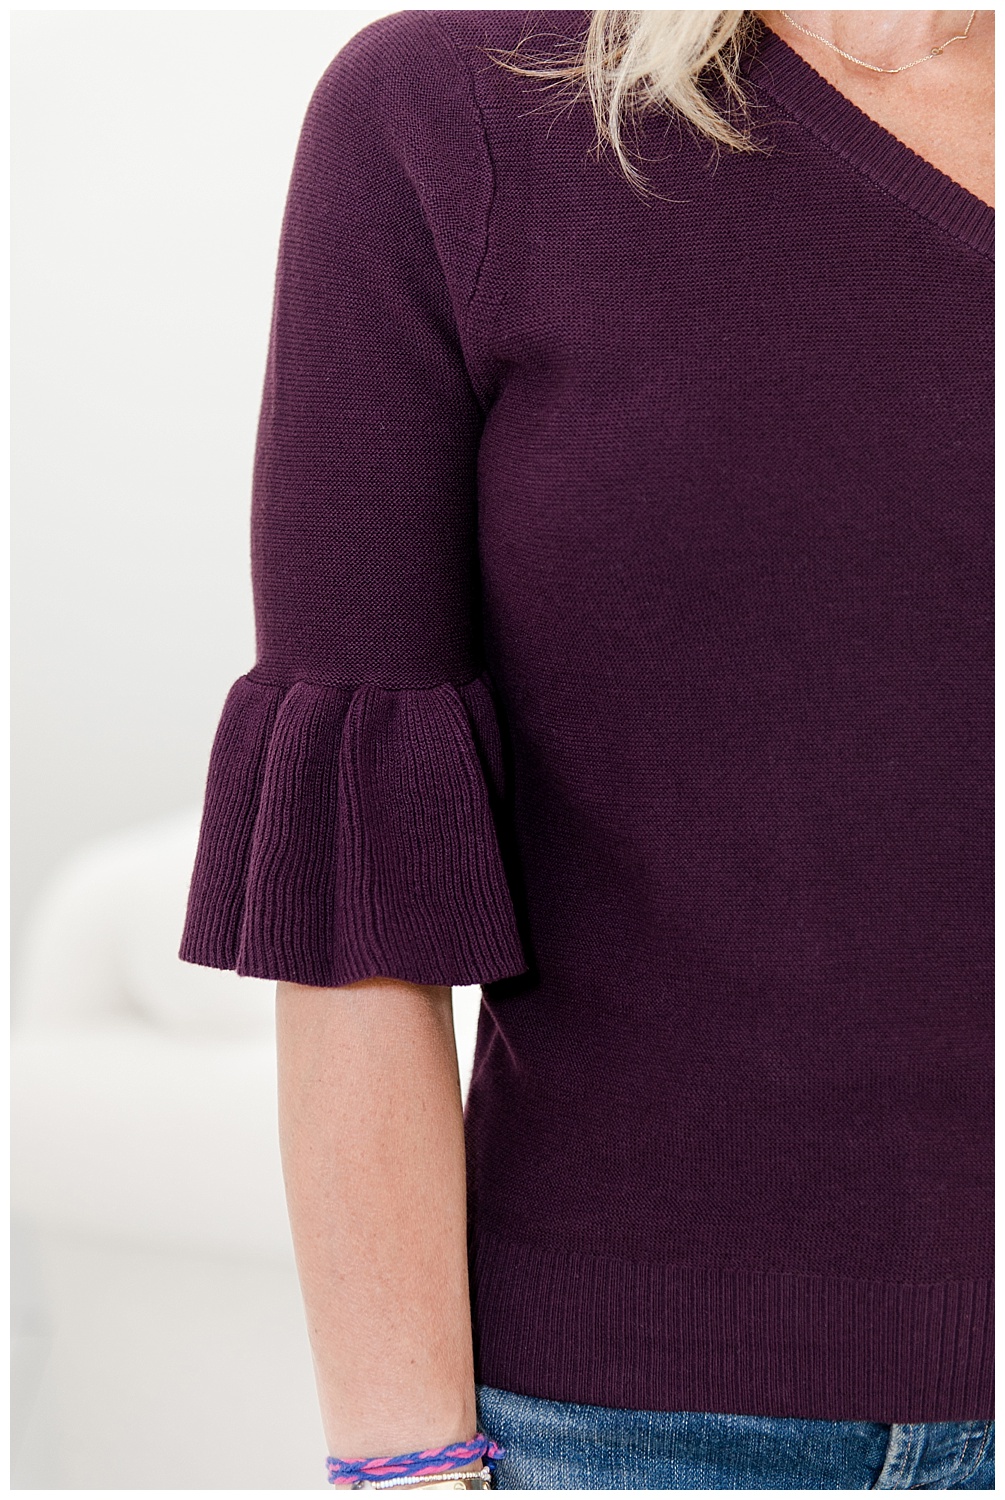 One Shoulder Sweater_1622.jpg